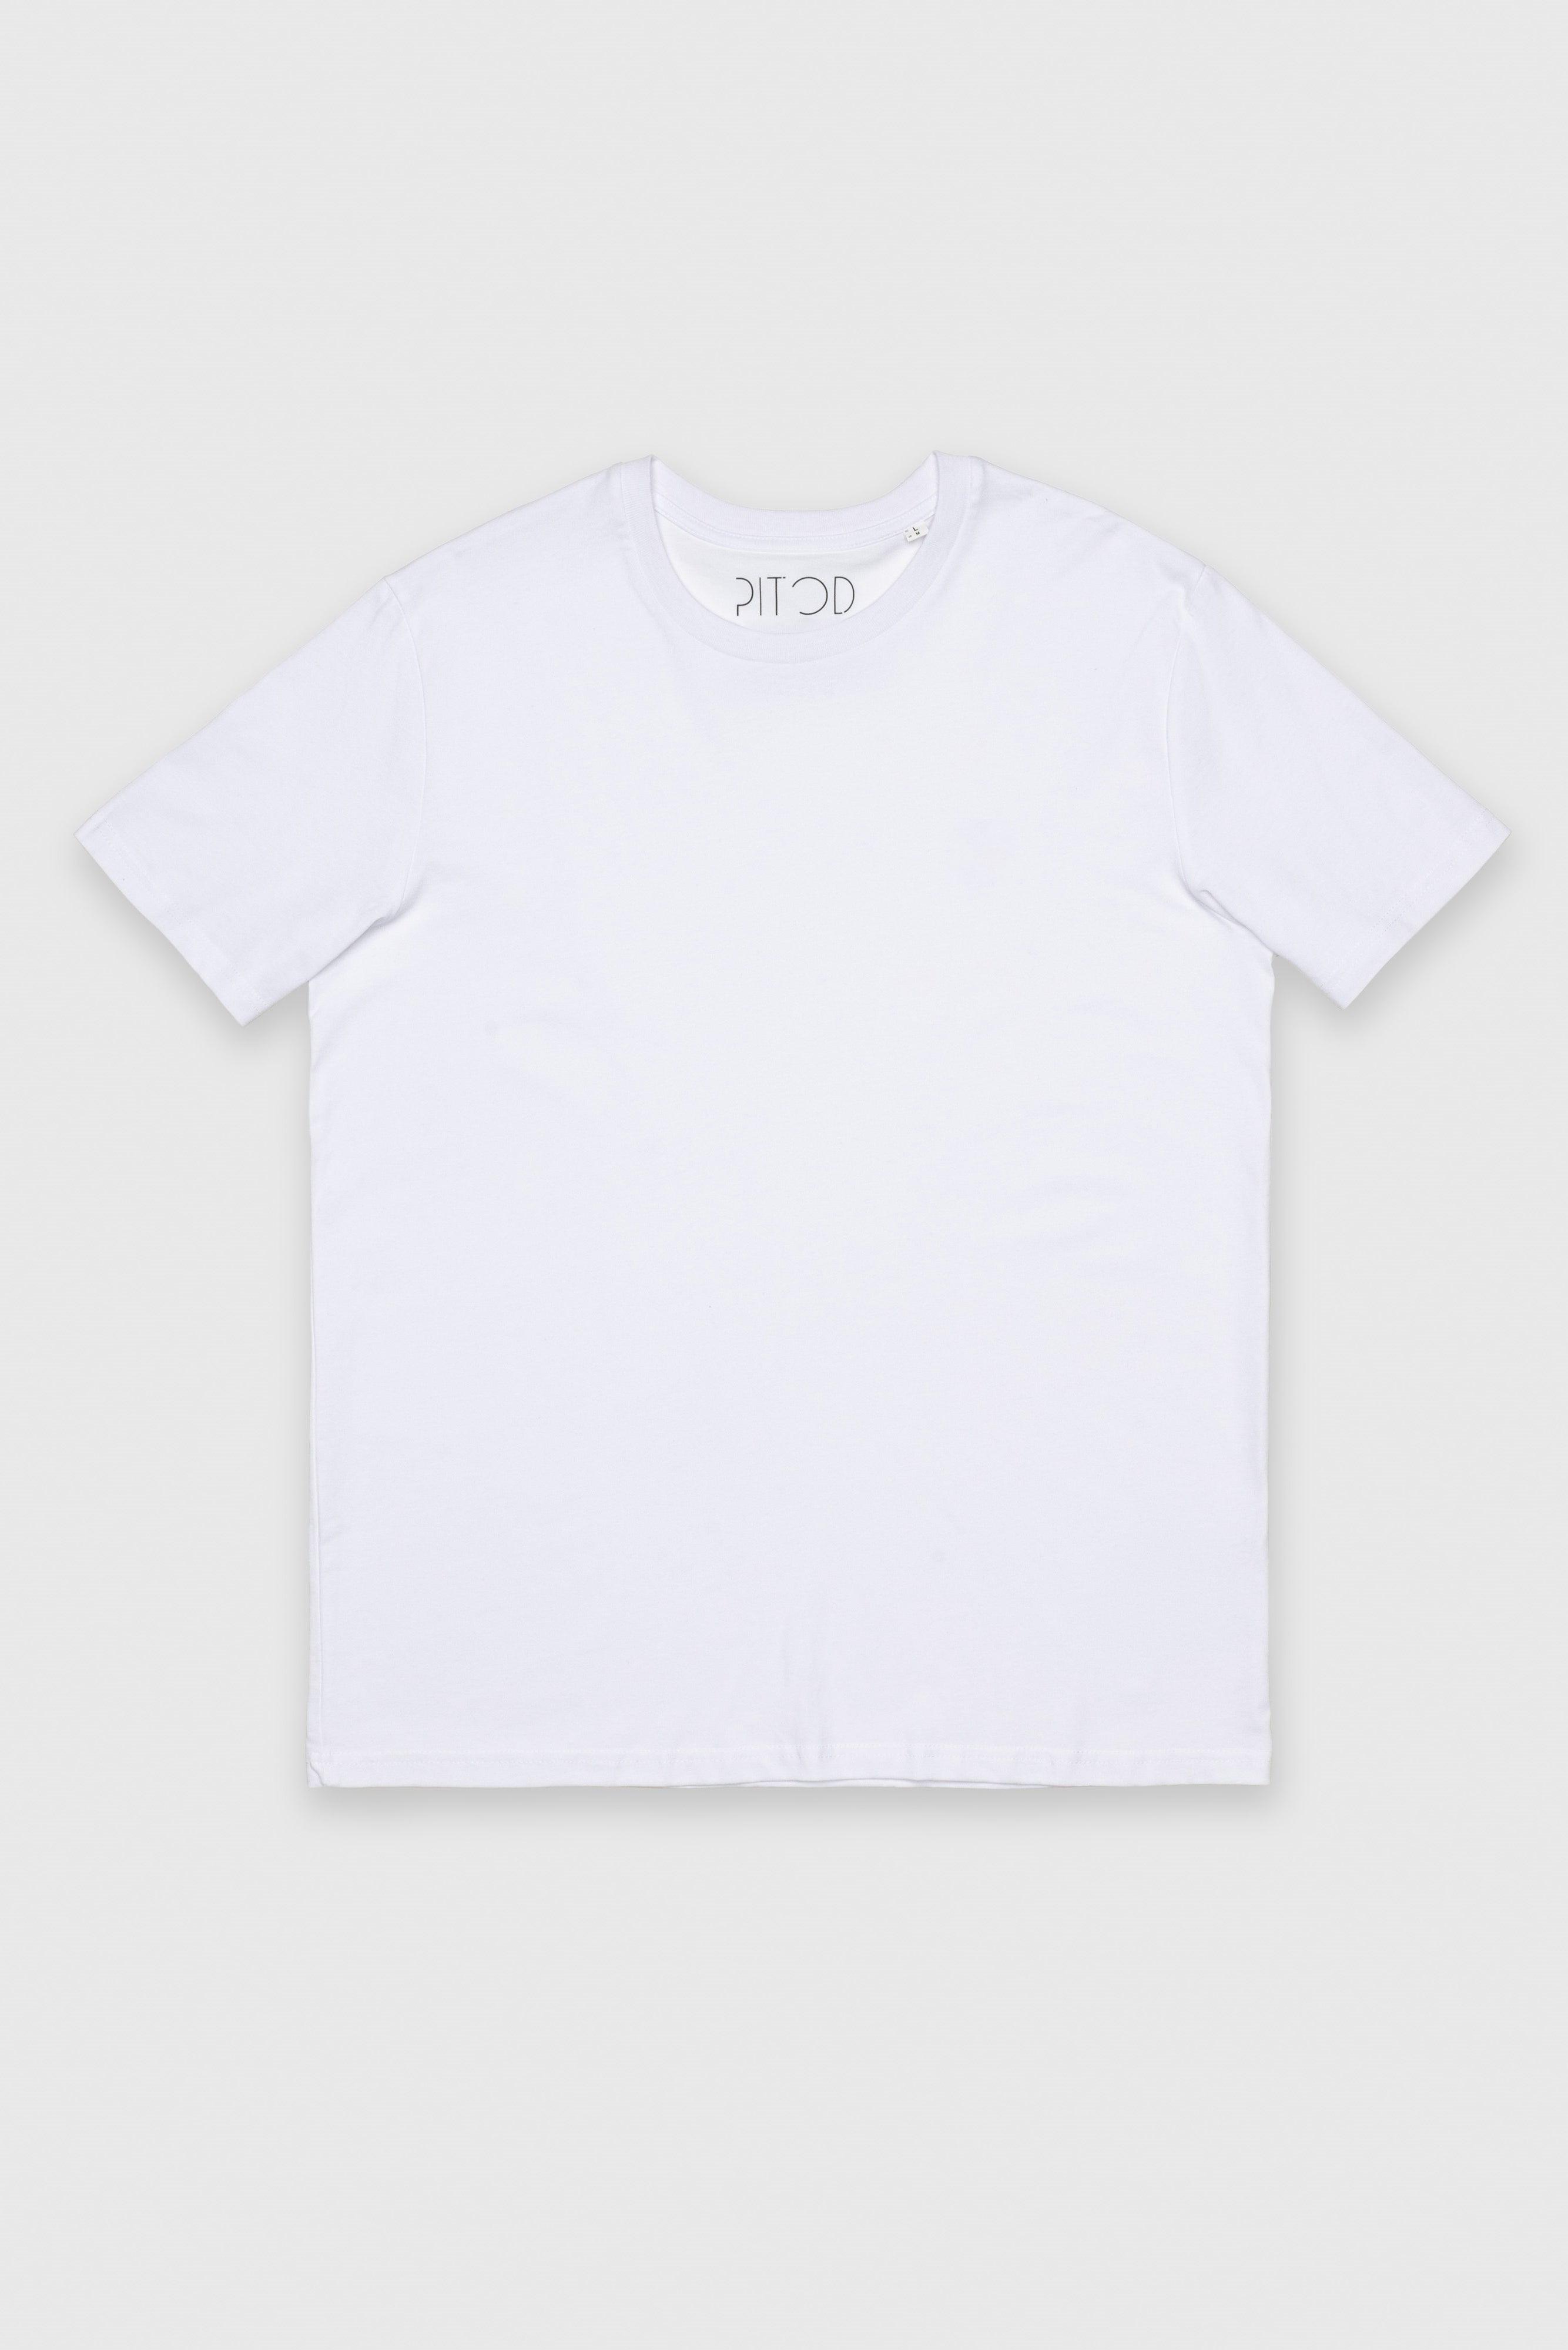 Pitod T-Shirt - 5 Pack | T-Shirts | pitod.com